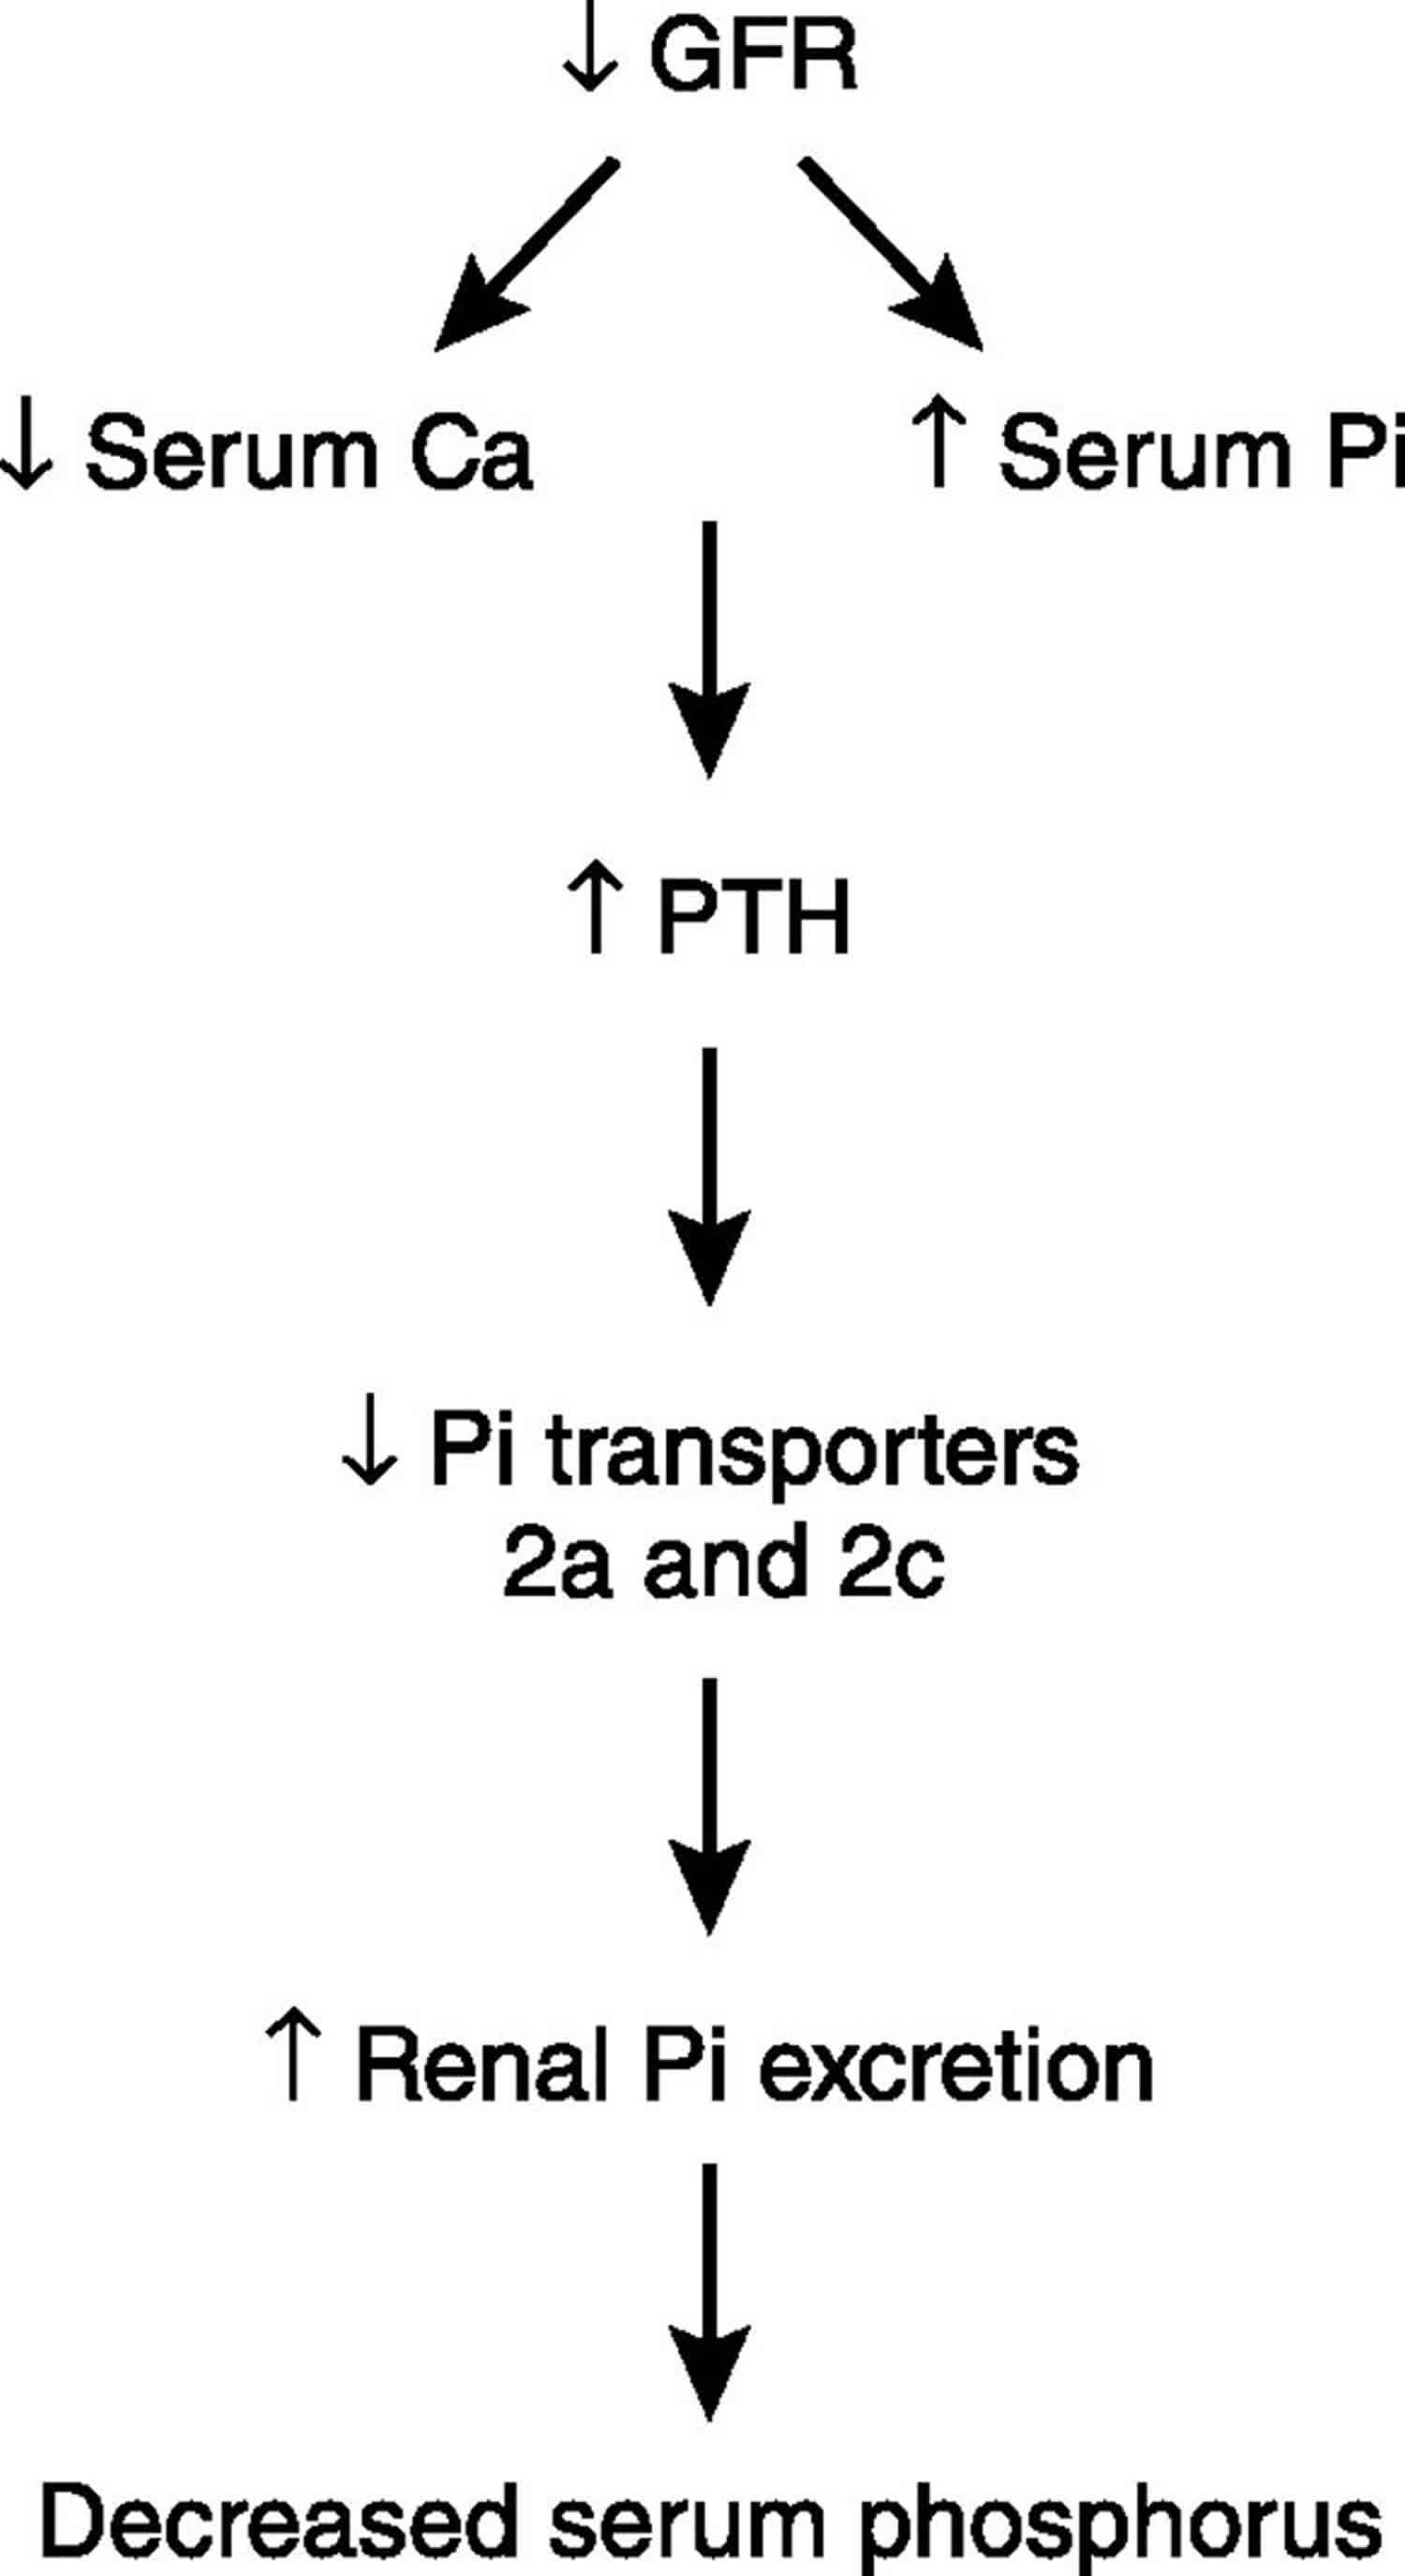 Parathyroid hormone controling phosphate homeostasis